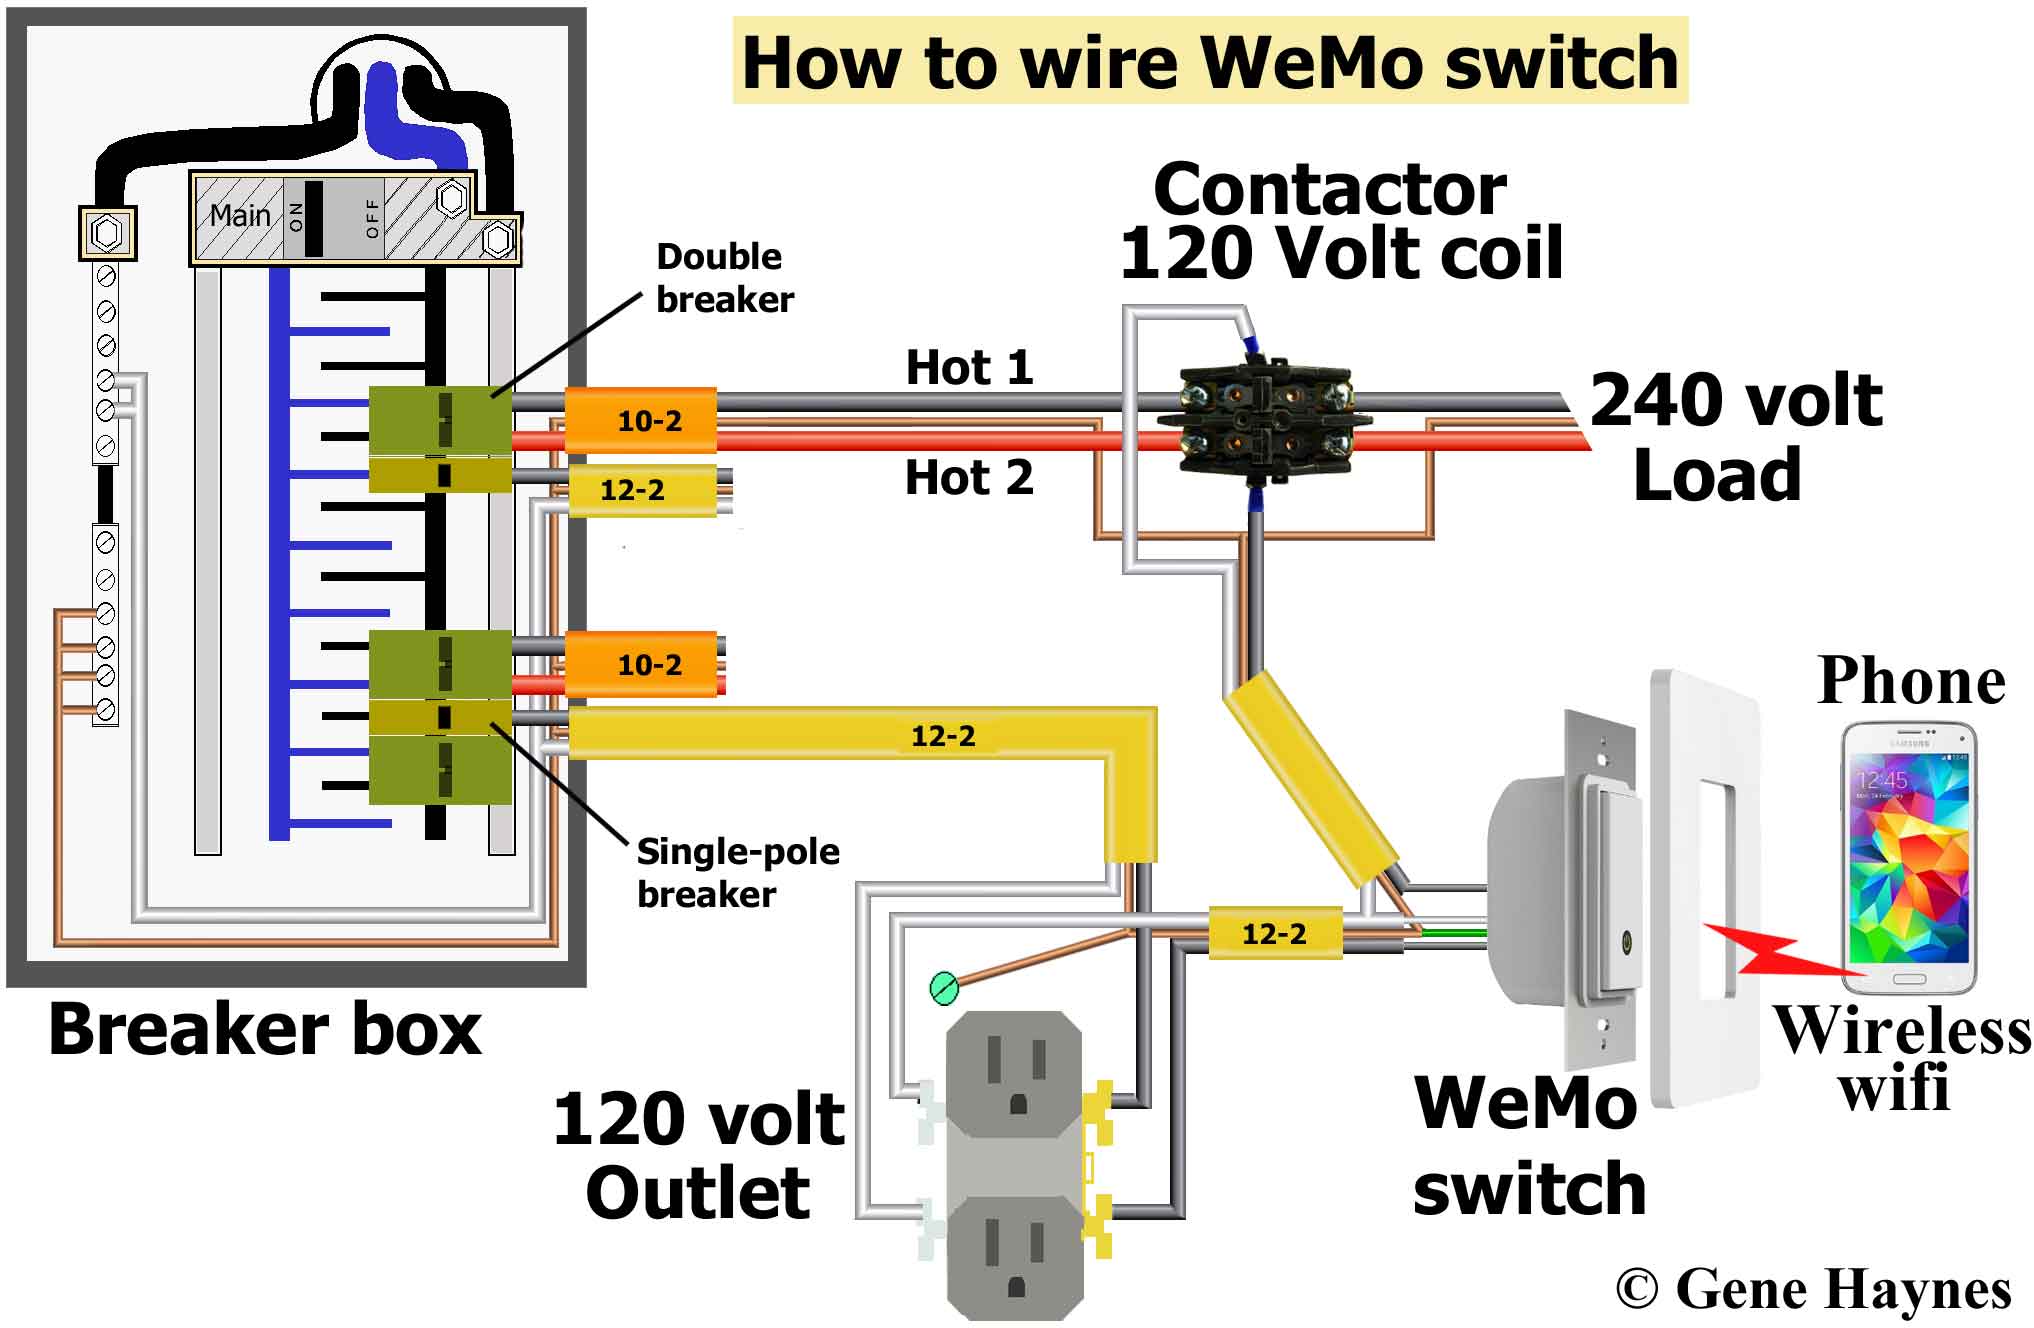 icm271 wiring diagram